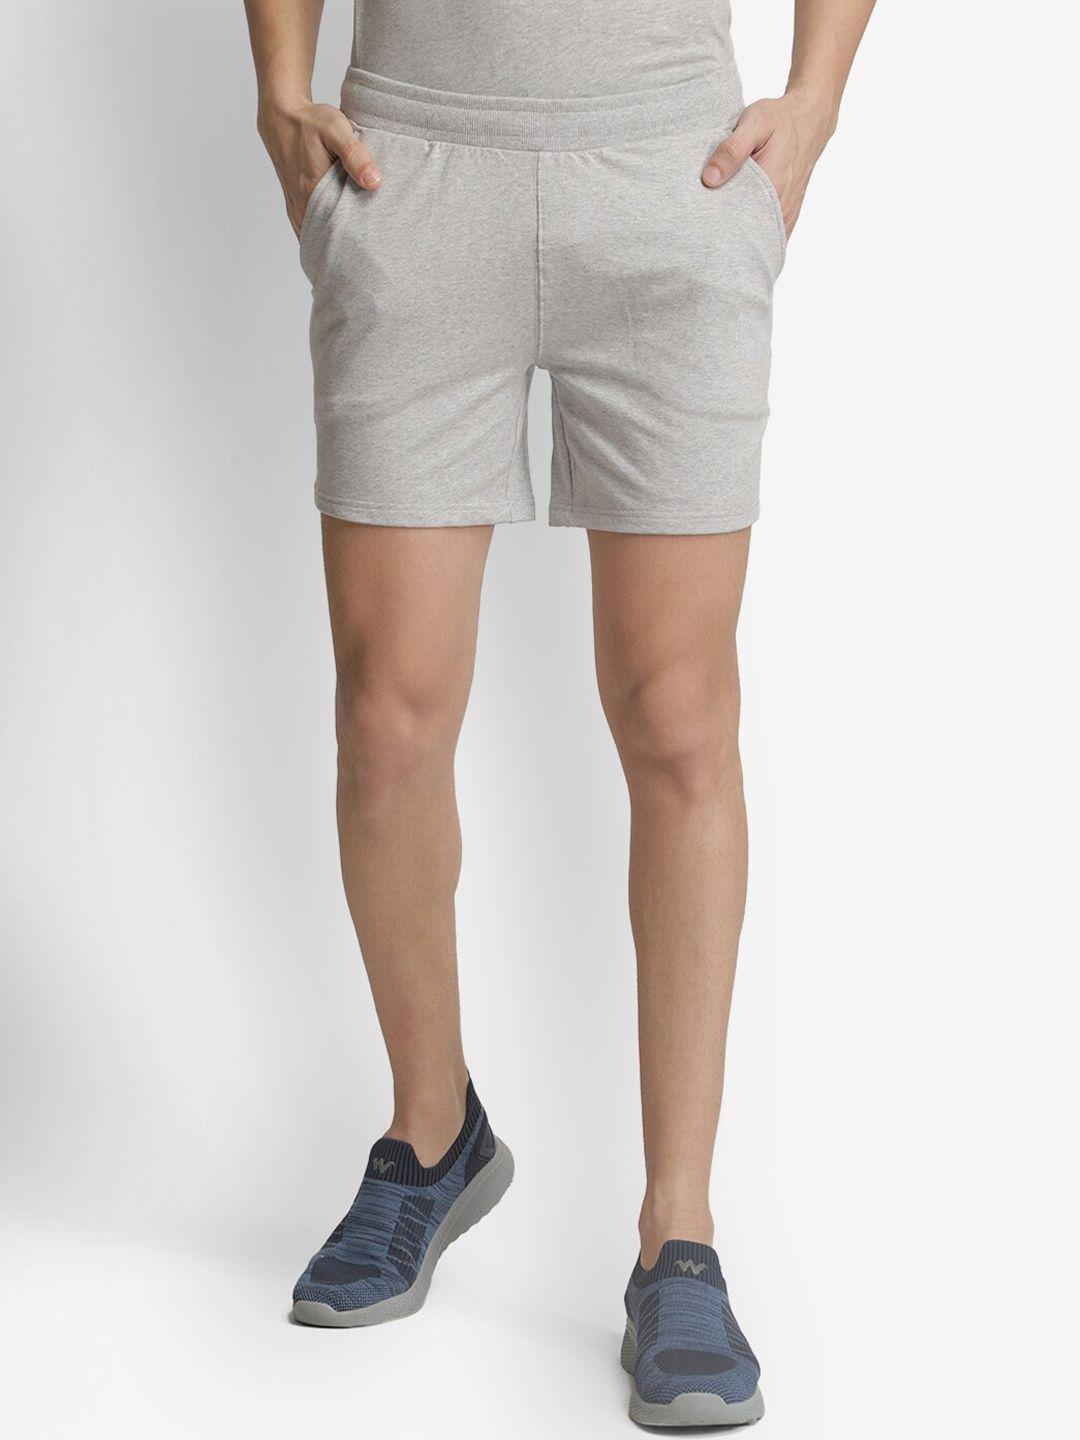 wildcraft men grey sports shorts